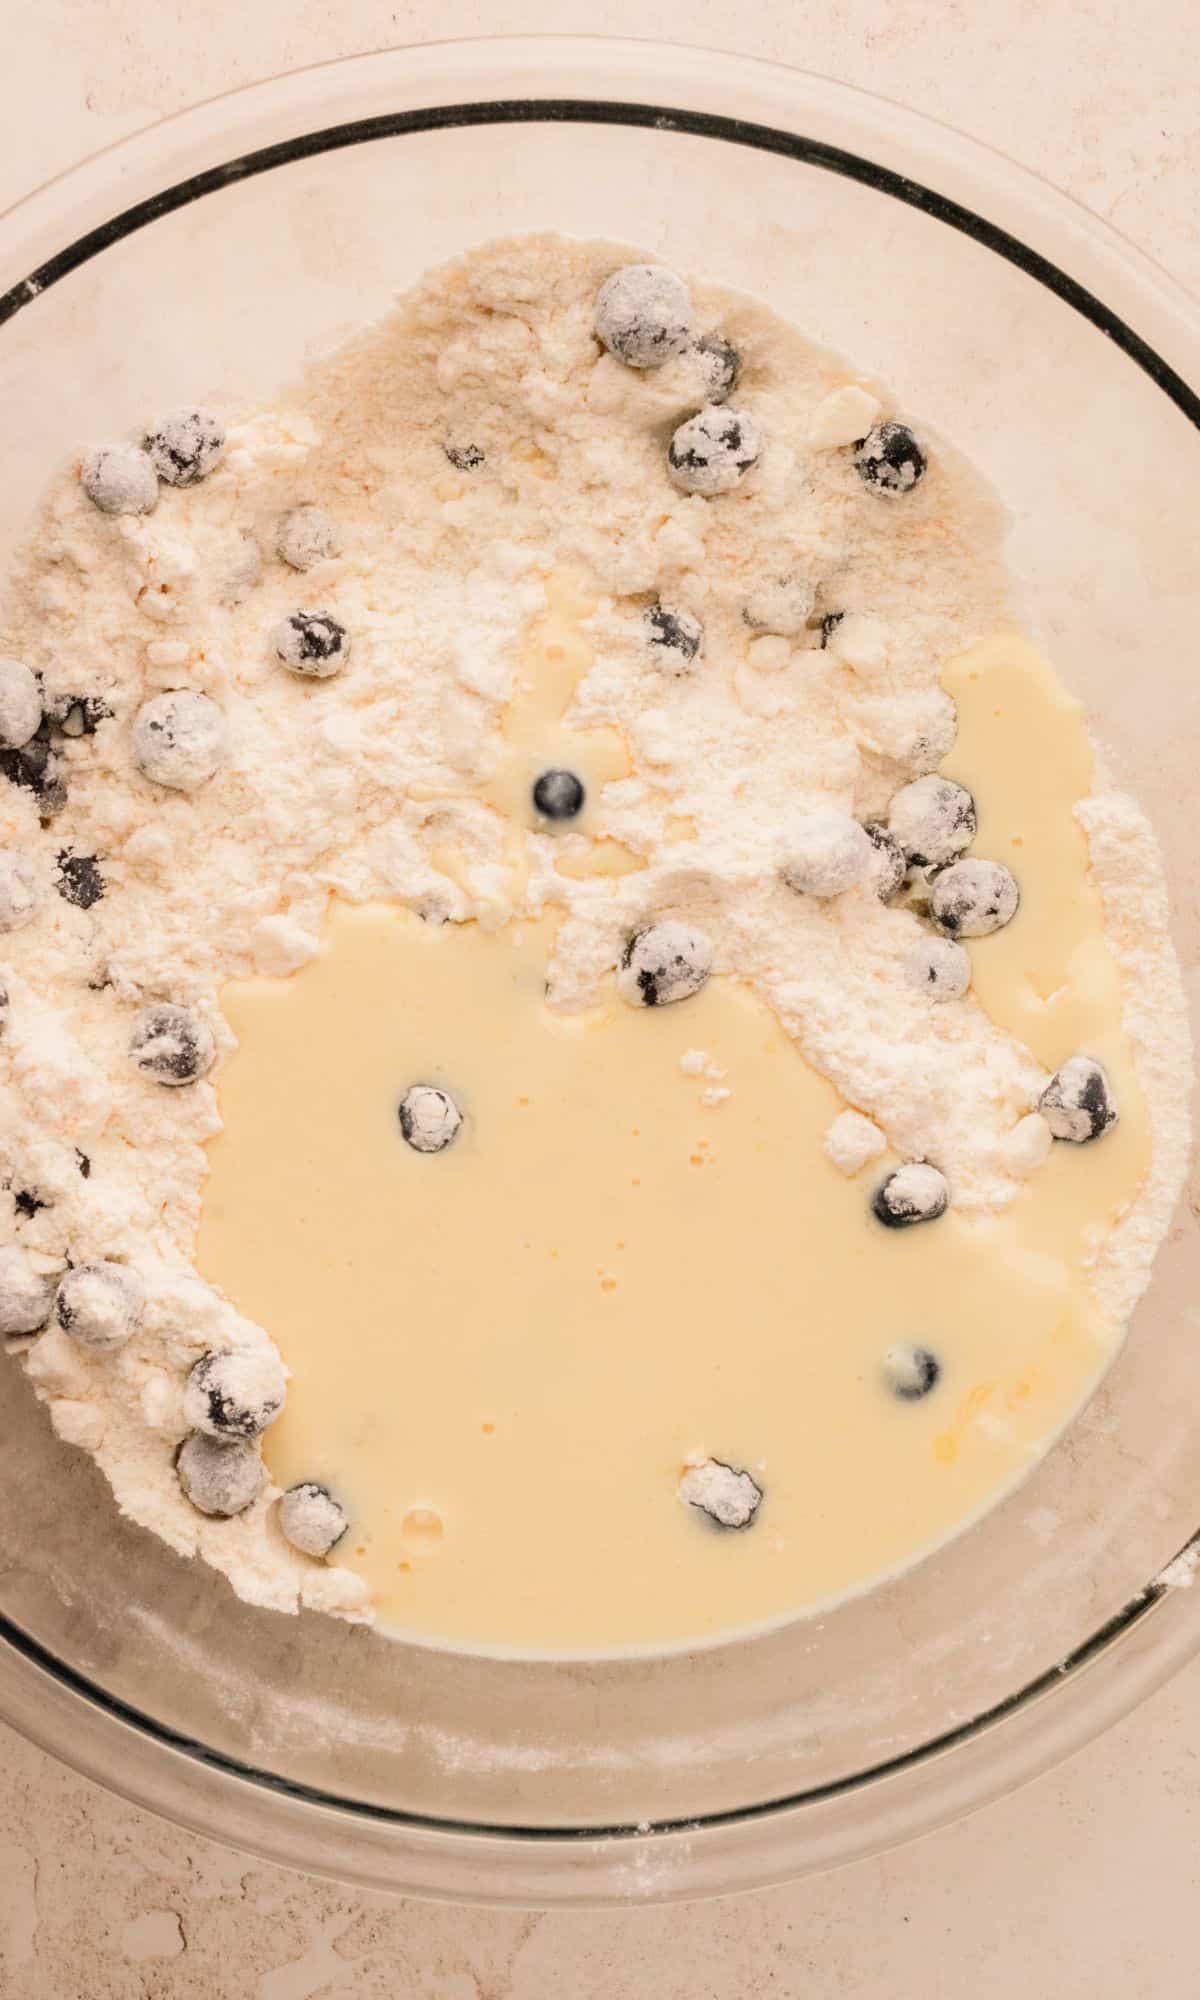 Blueberry scone dough preparation.